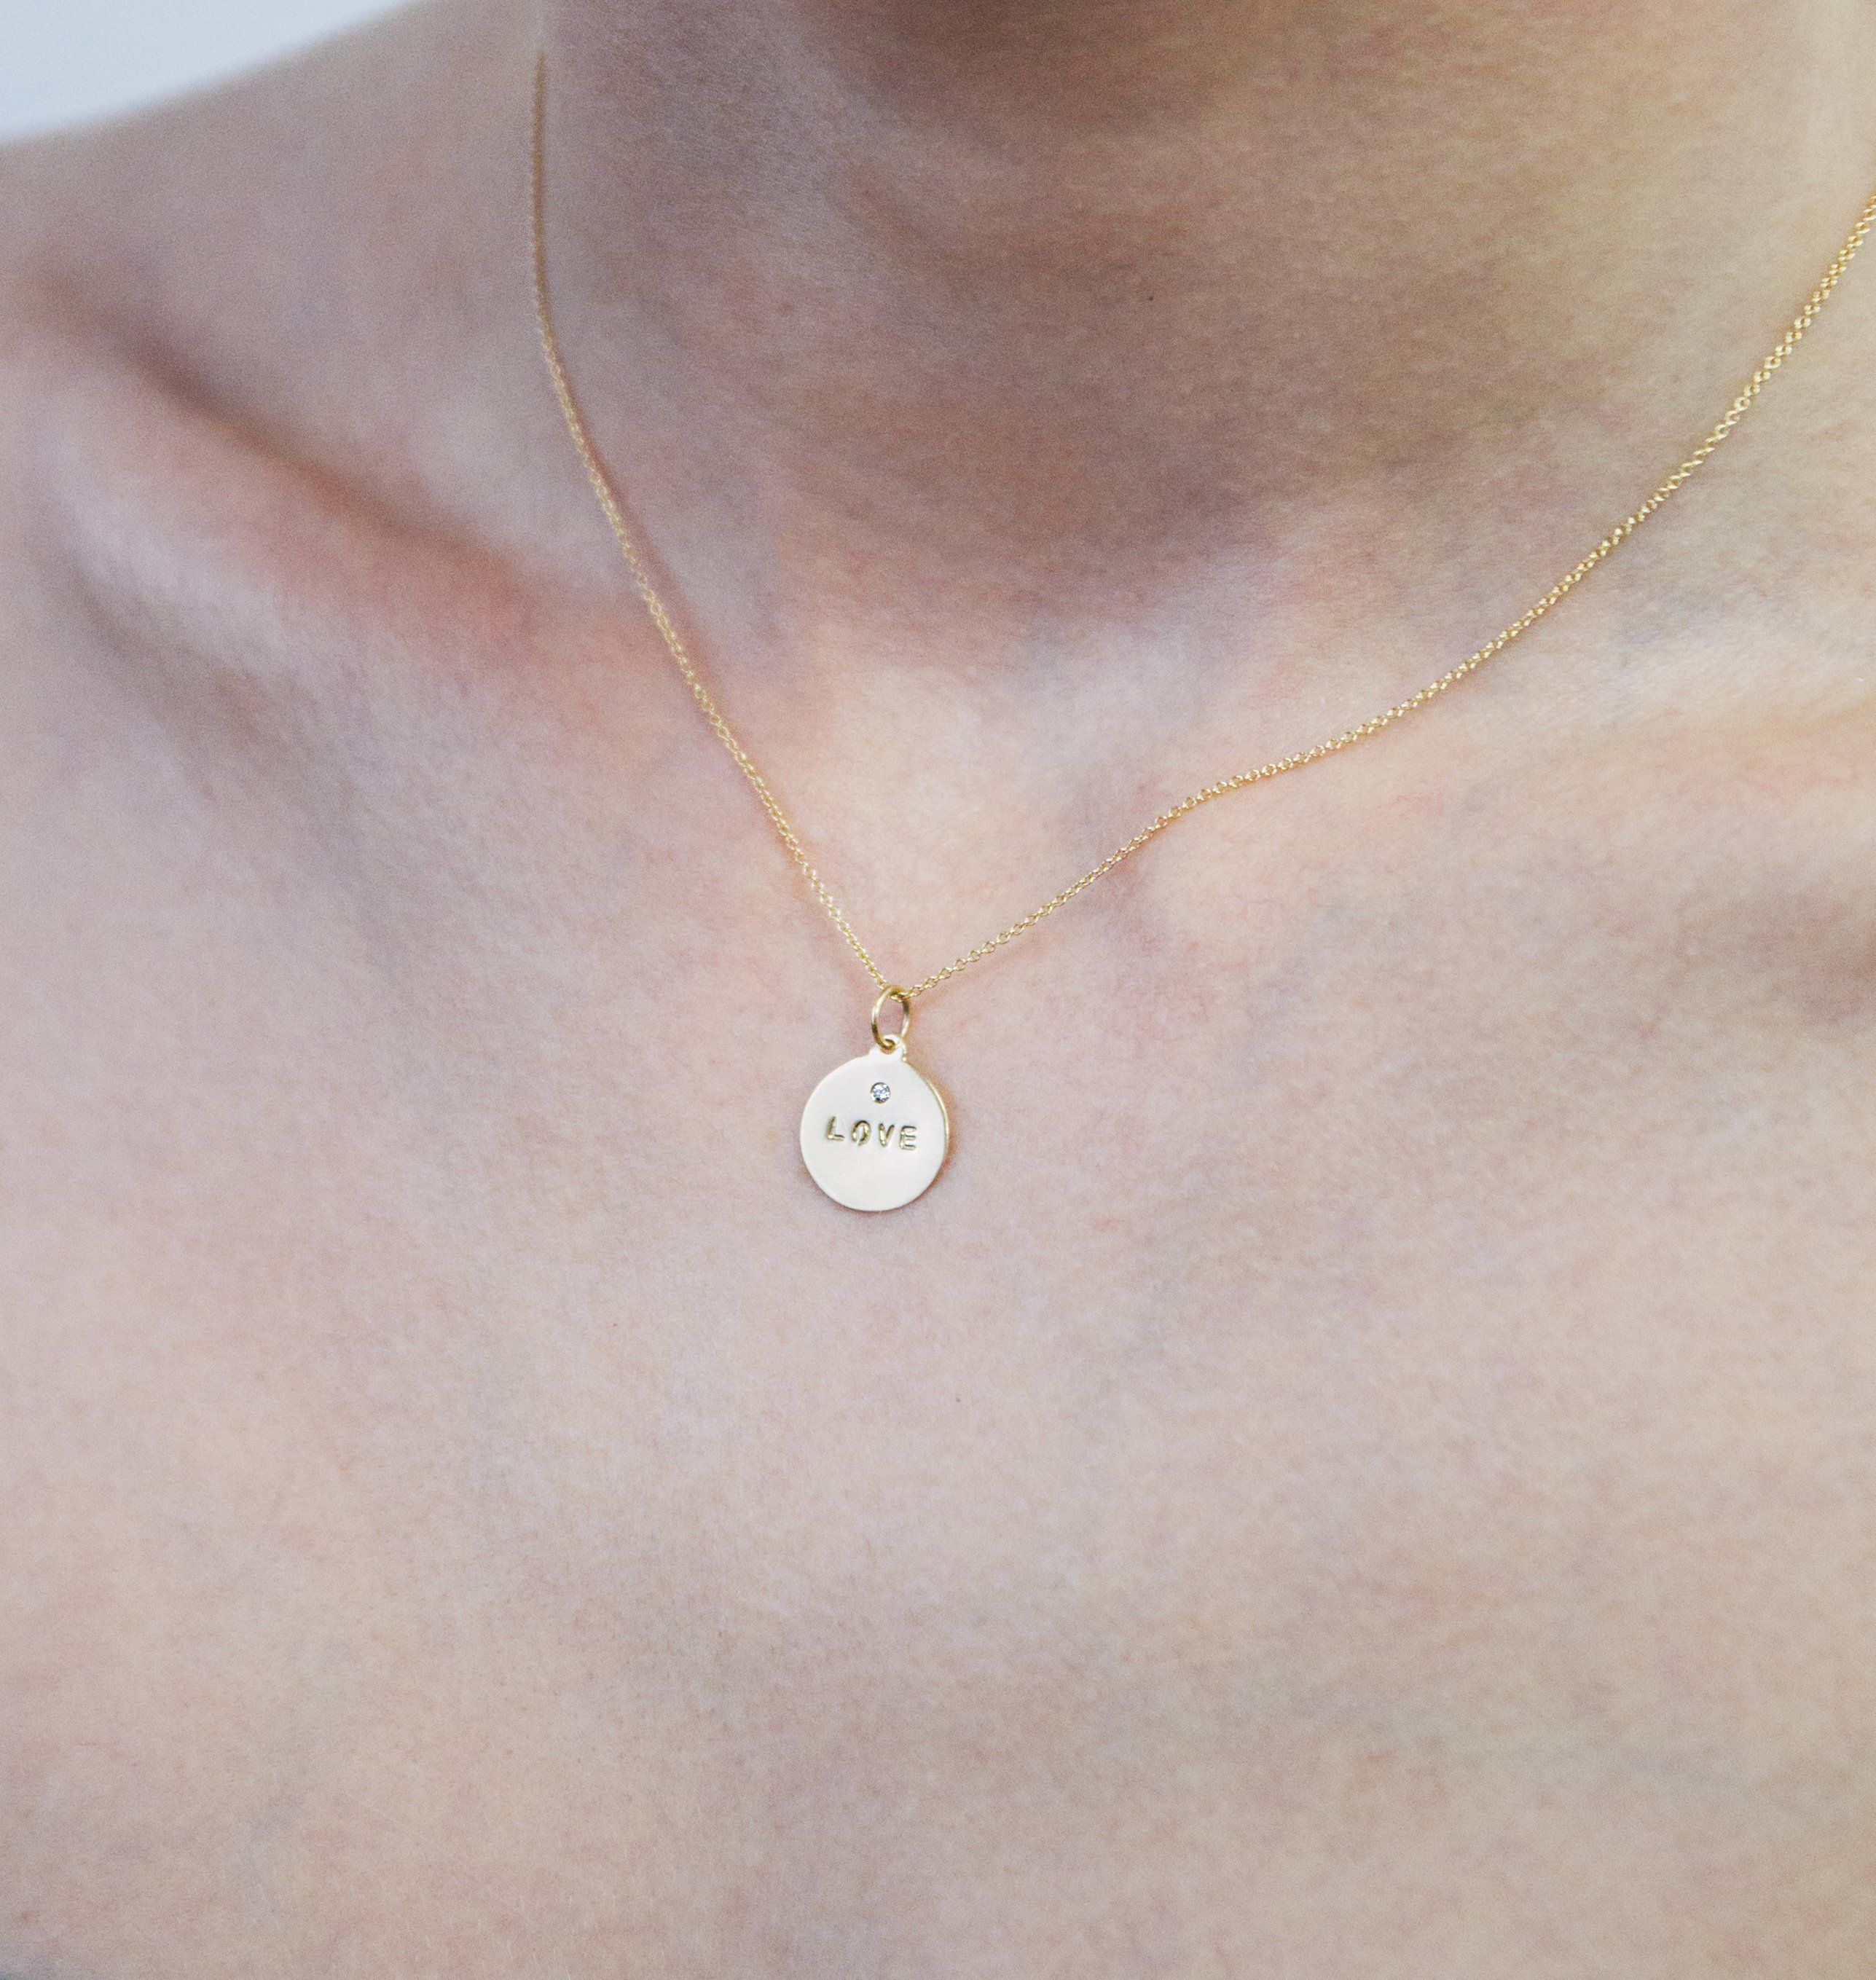 Diamond Snowflake Pendant for Bracelets & Necklaces 14K White Gold by Helen Ficalora